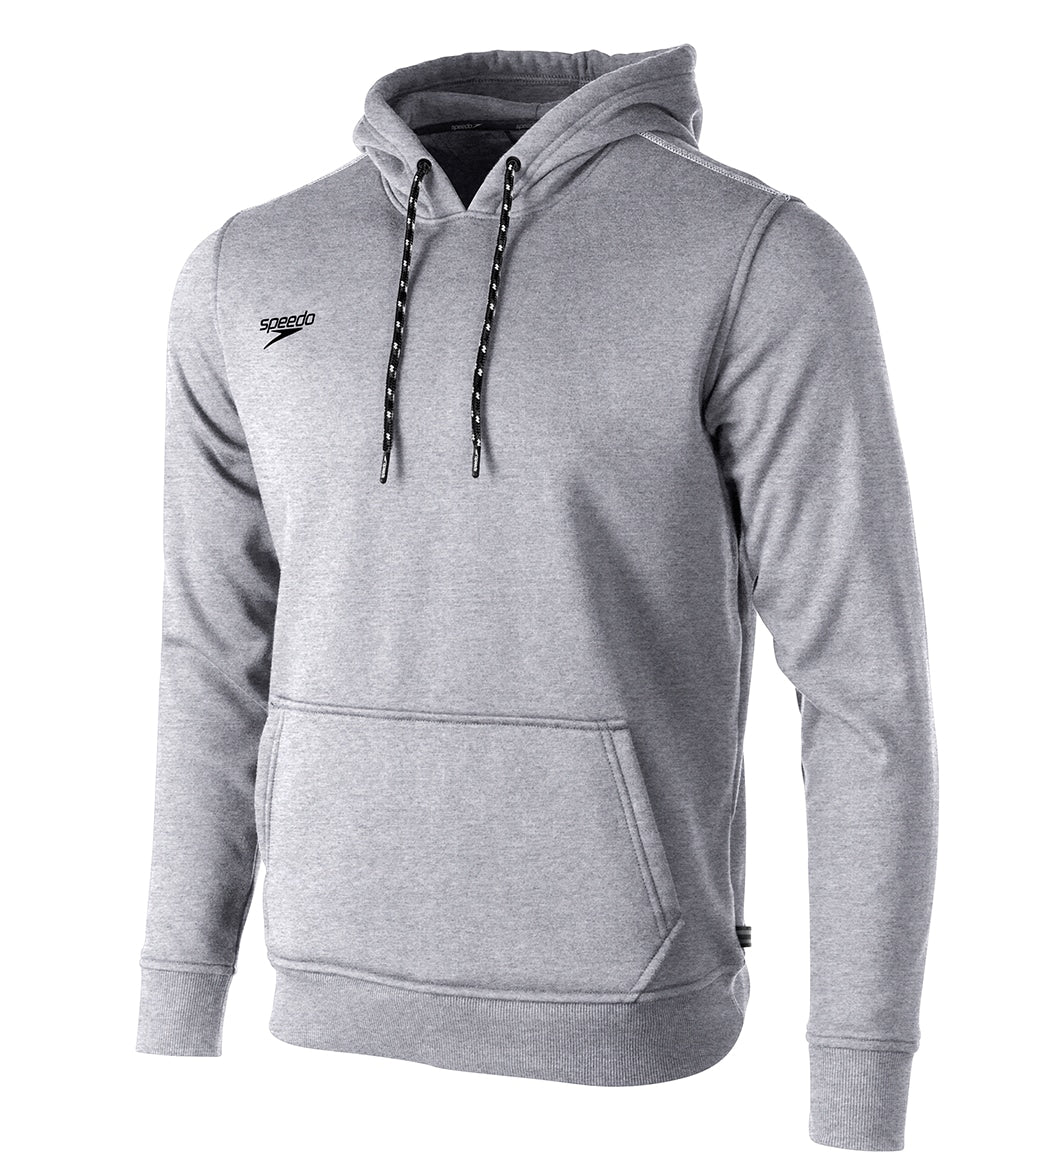 Speedo Men's Long Sleeve Hooded Sweatshirt - Medium Heather Grey 2Xl Cotton/Polyester - Swimoutlet.com